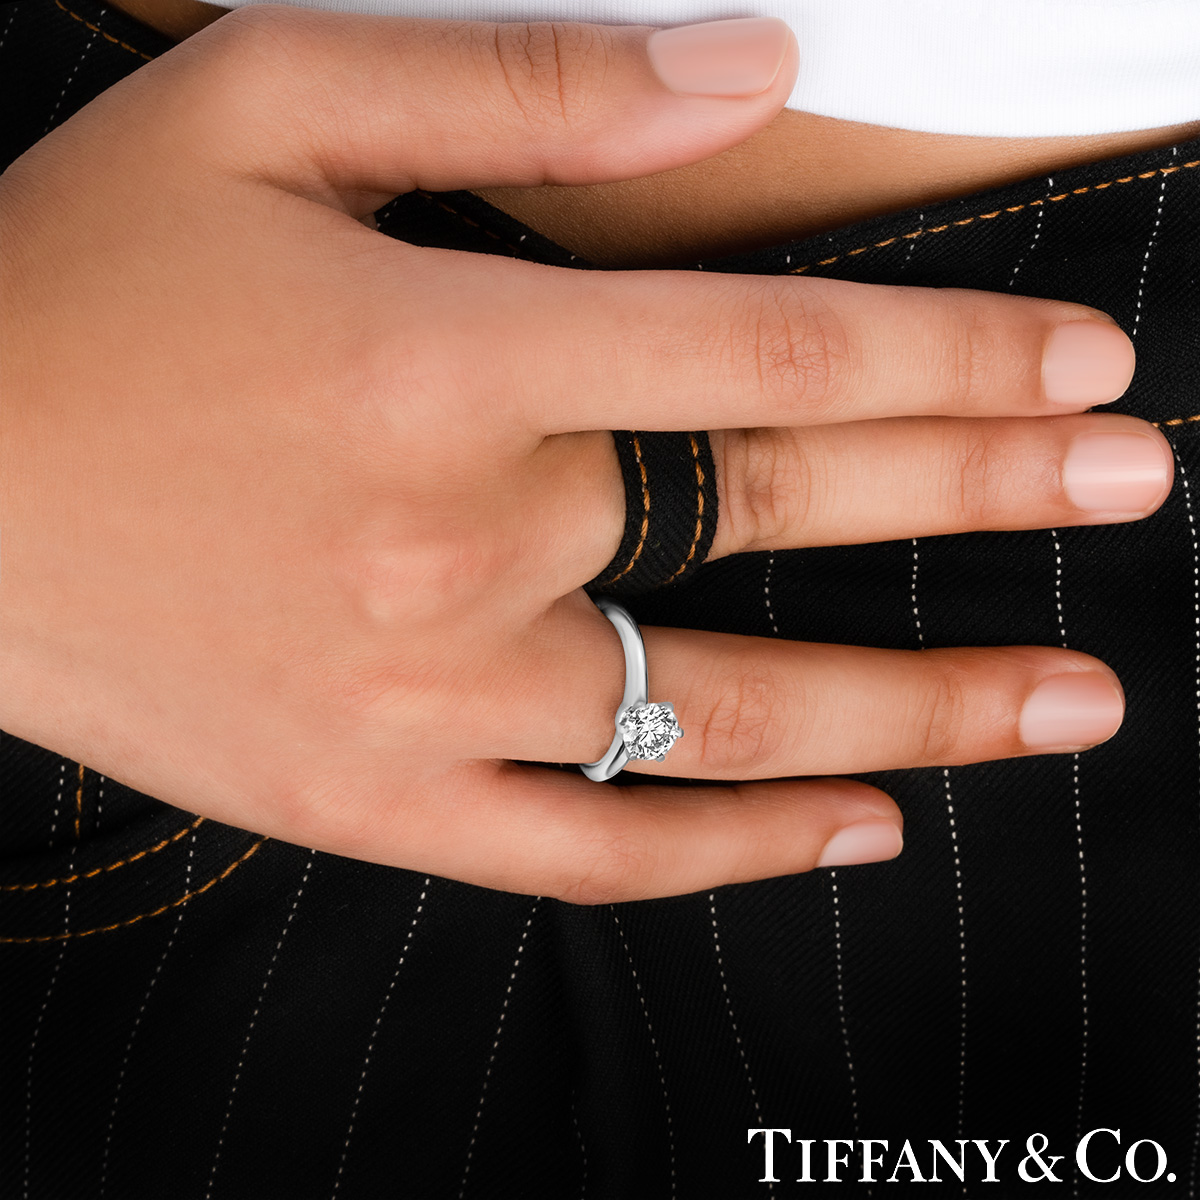 Tiffany & Co. Platinum Diamond Setting Ring 1.16ct I/VVS1 XXX